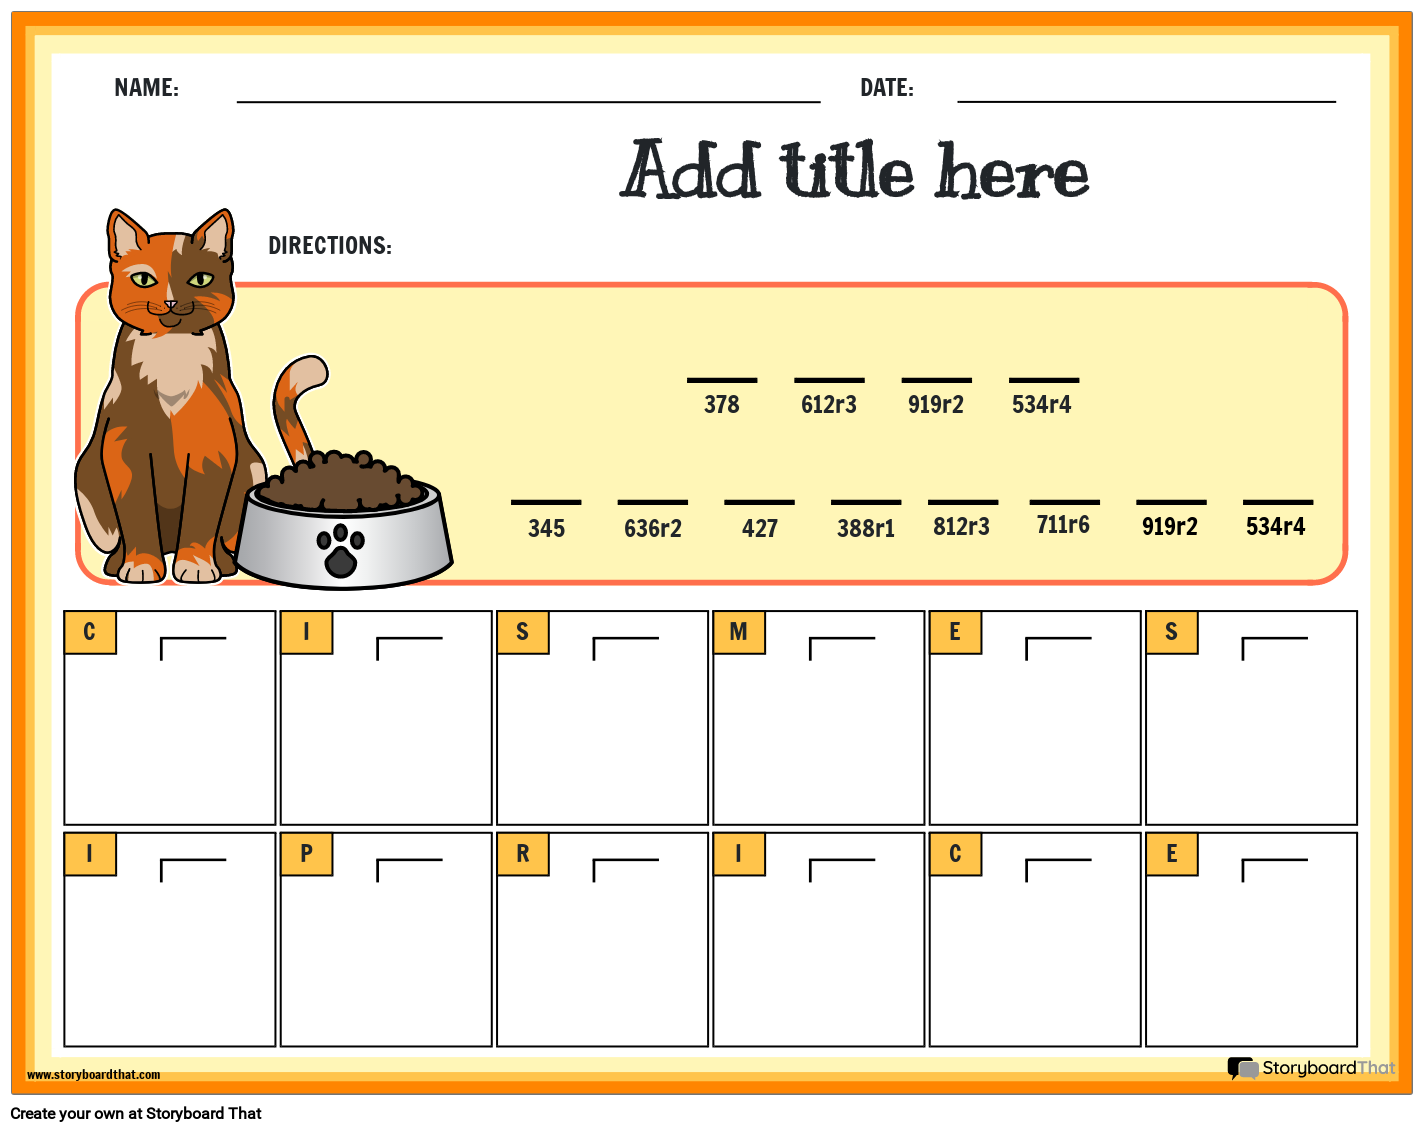 A Cat's Breakfast - Math Riddle Worksheet